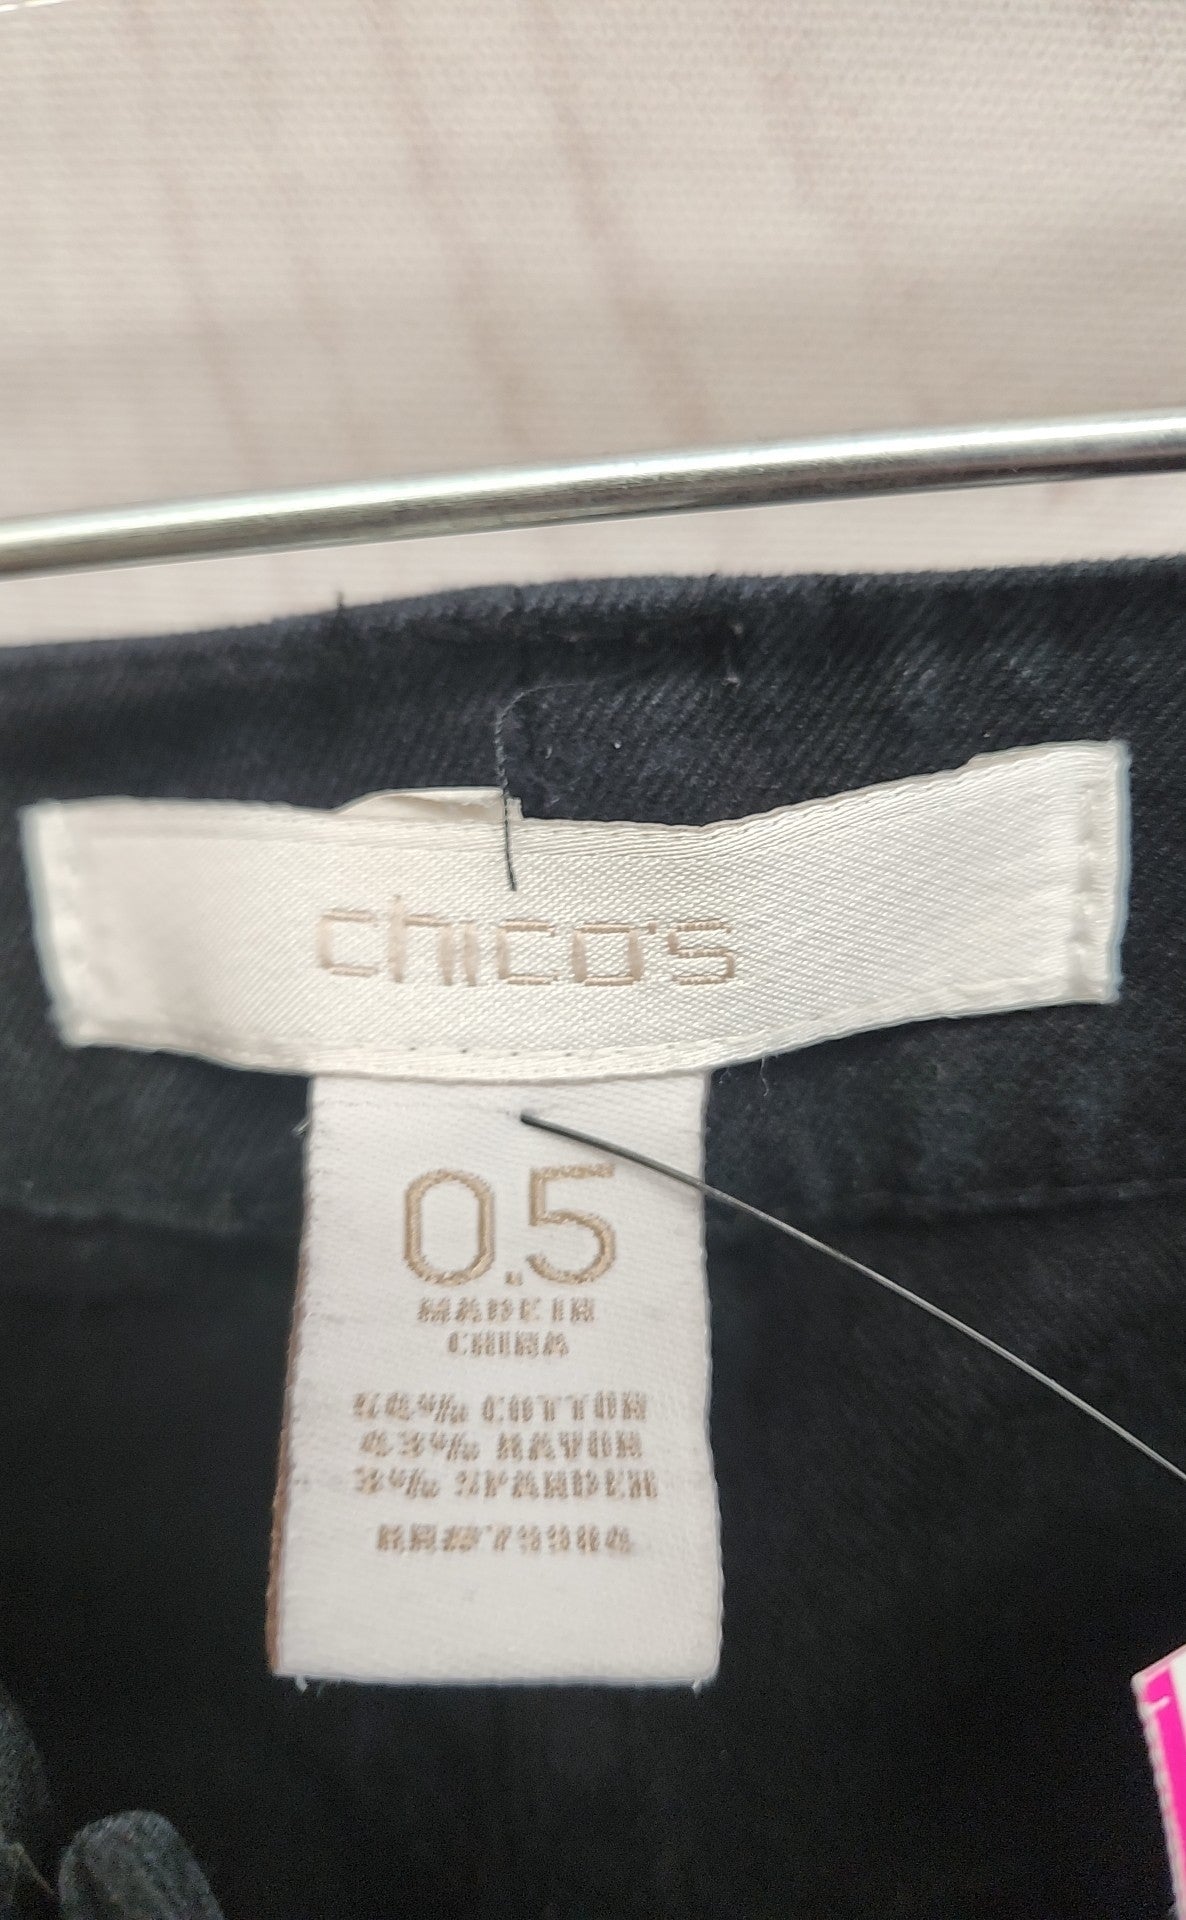 Chico's Women's Size 28 (5-6) Black Jeans